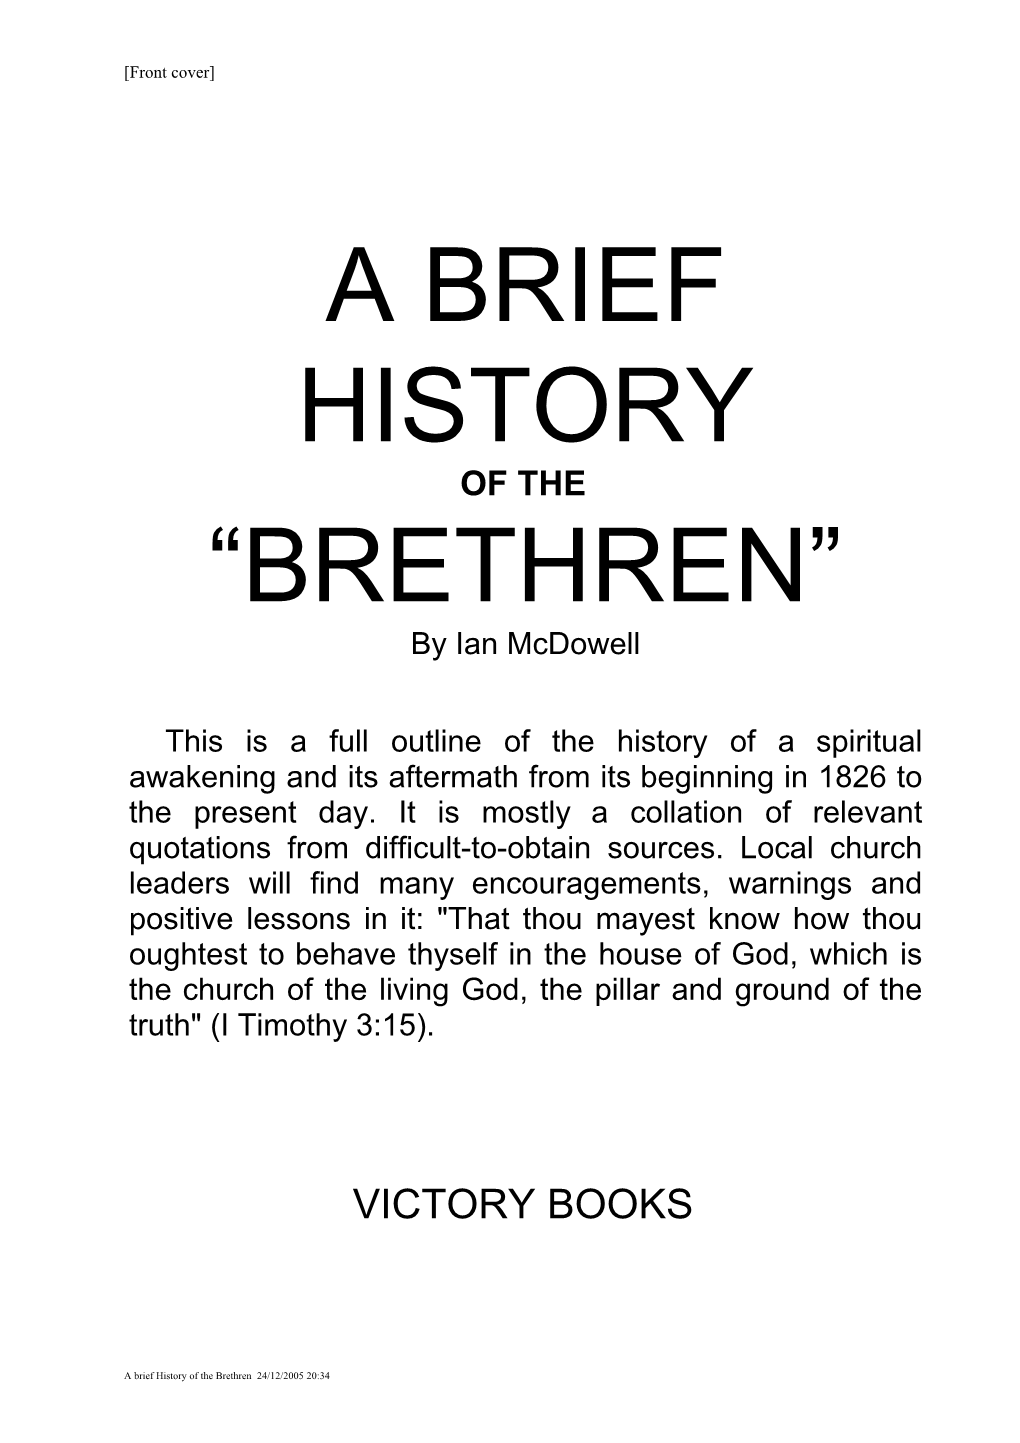 A Brief History “Brethren”